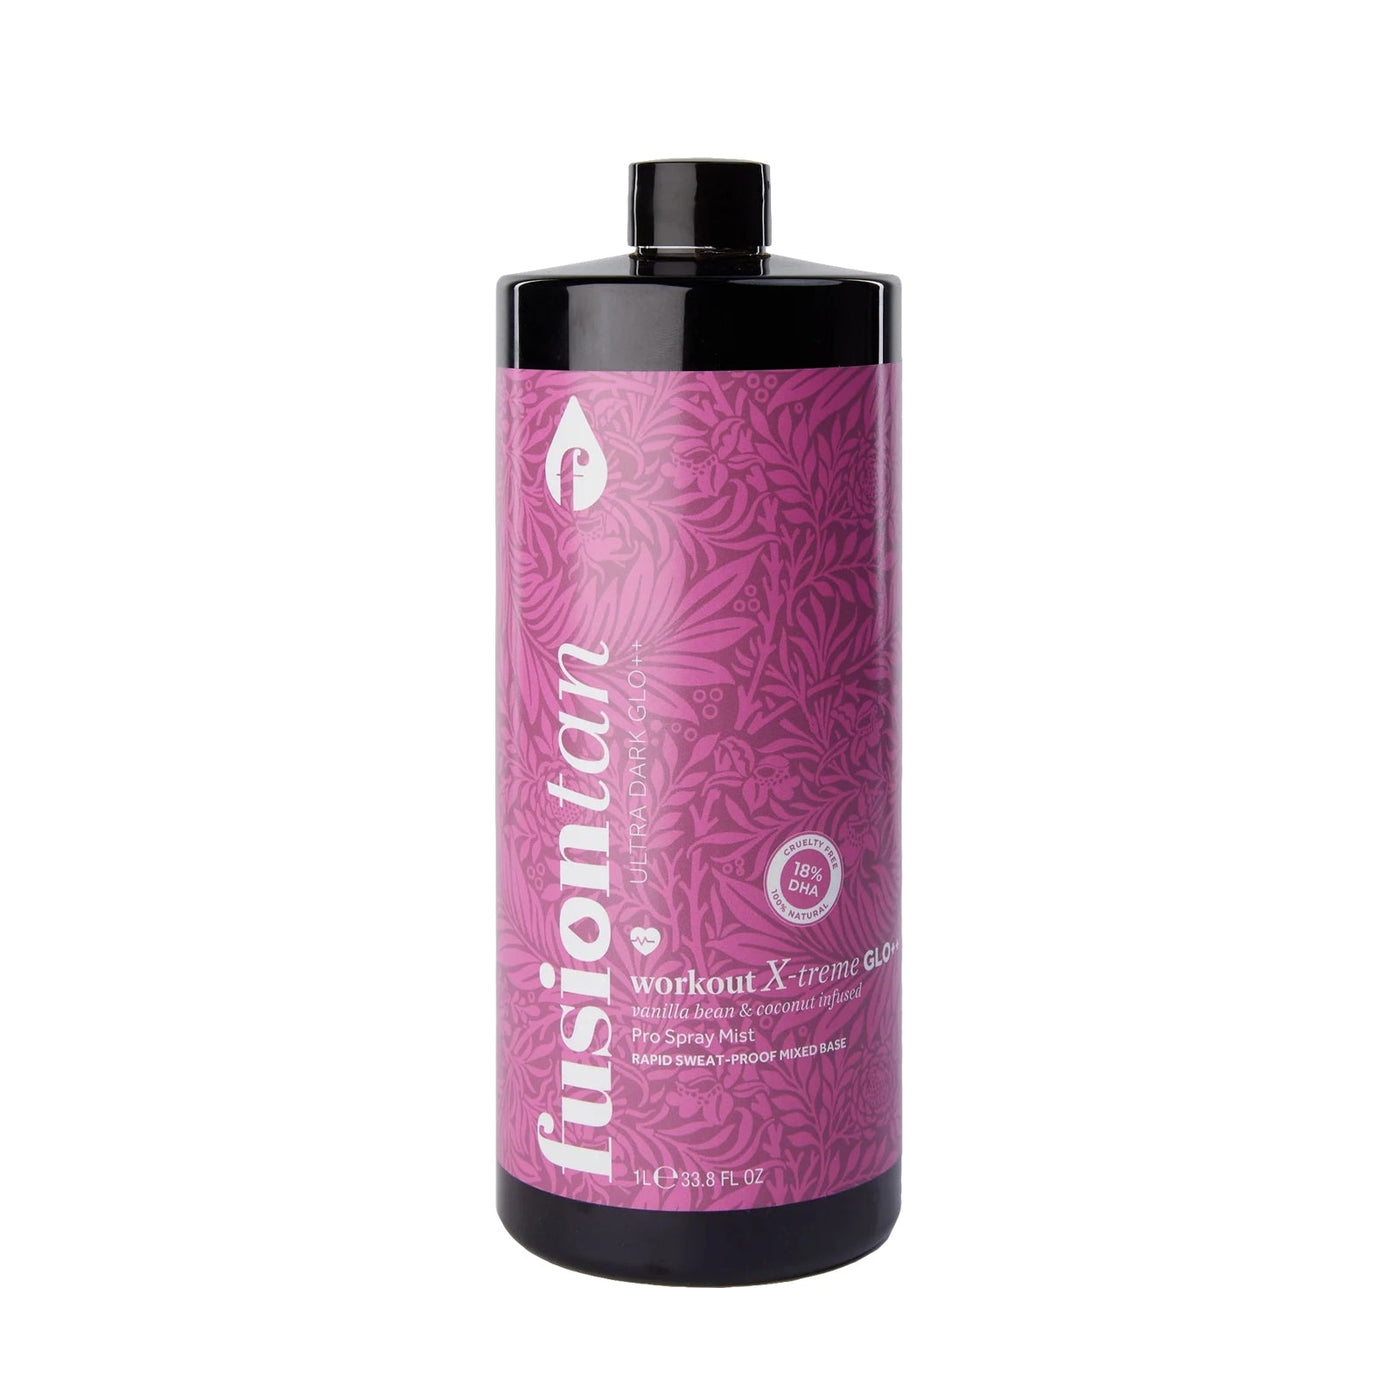 Fusion Tan Ultra Dark Workout X-treme GLO++ 18% Pro Spray Tan Mist